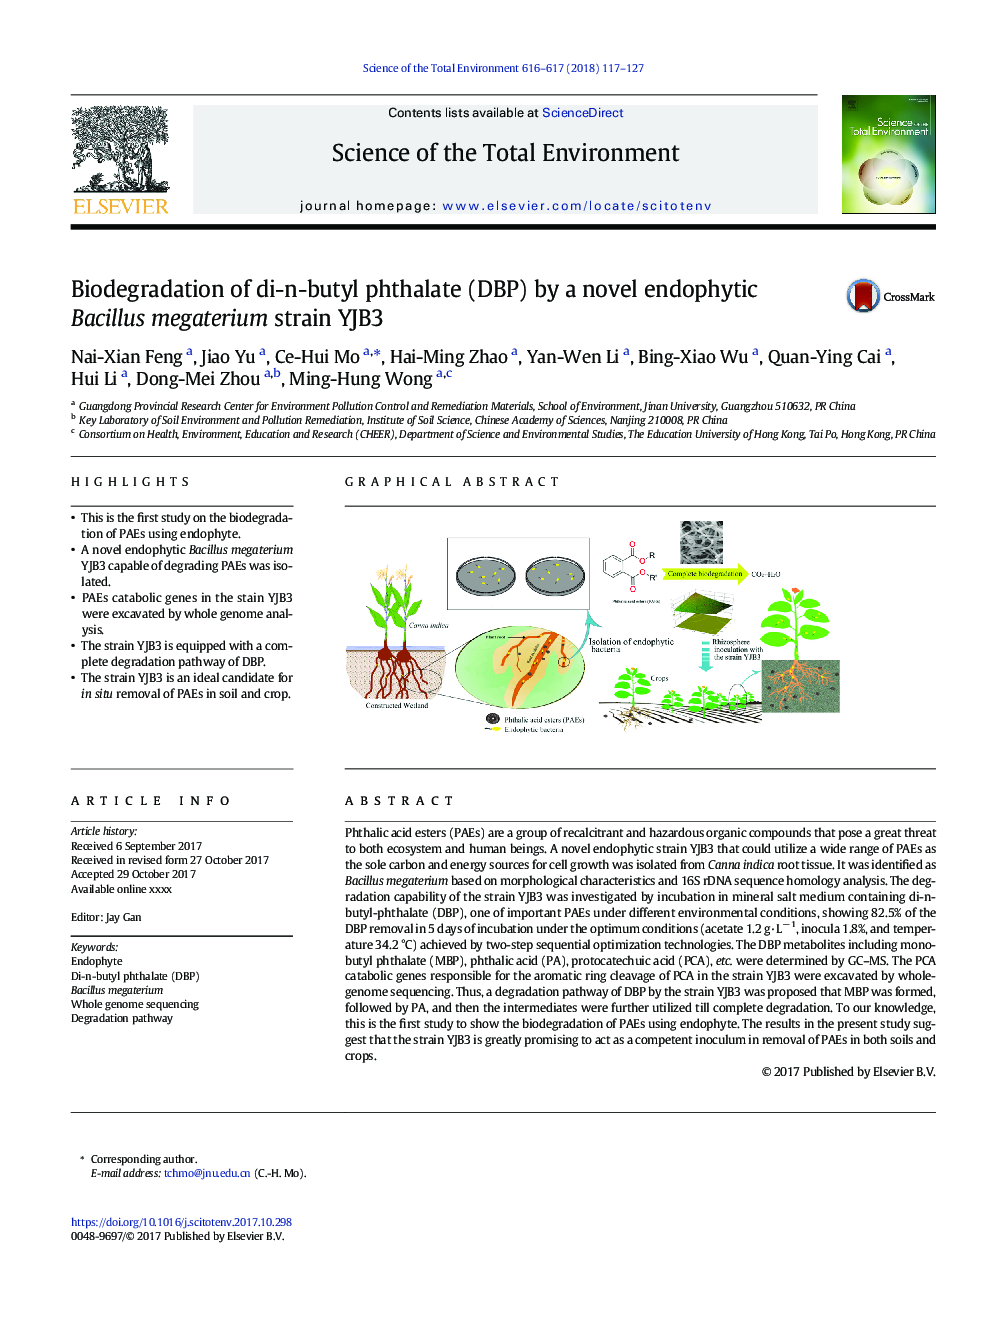 Biodegradation of di-n-butyl phthalate (DBP) by a novel endophytic Bacillus megaterium strain YJB3